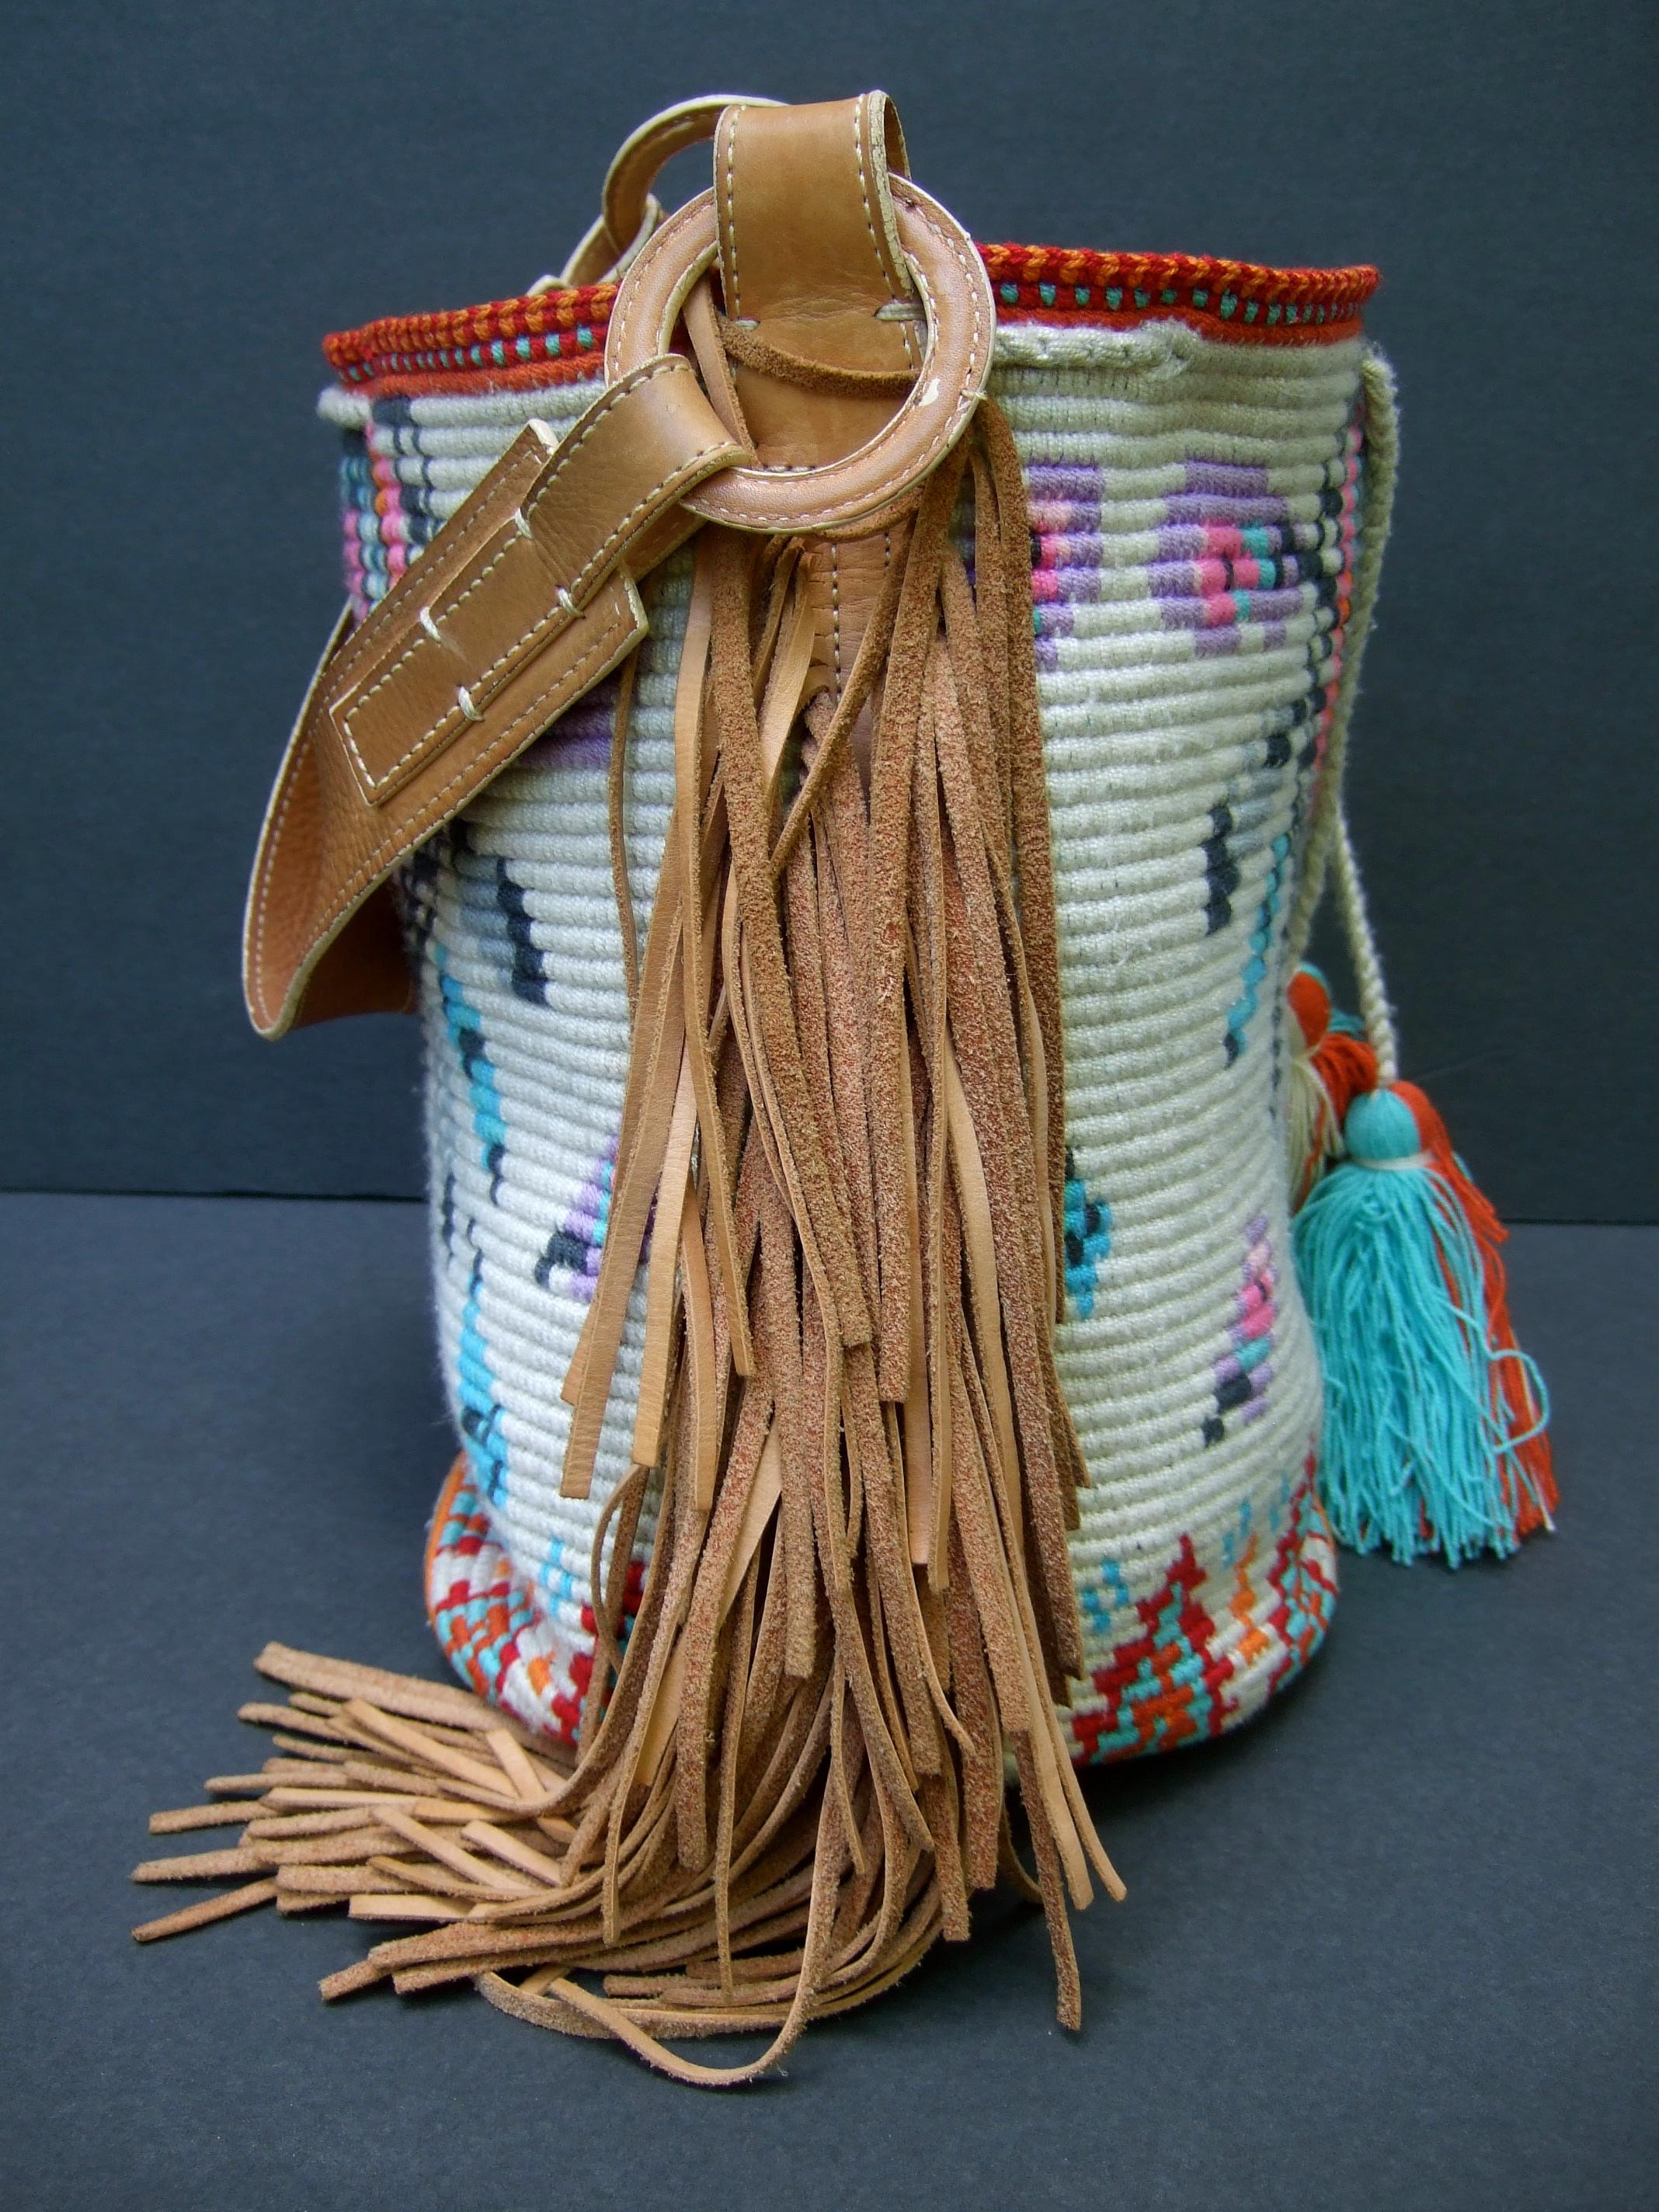  Handmade Woven Wool Knit Artisan Bucket Shoulder Bag c 1990s For Sale 5